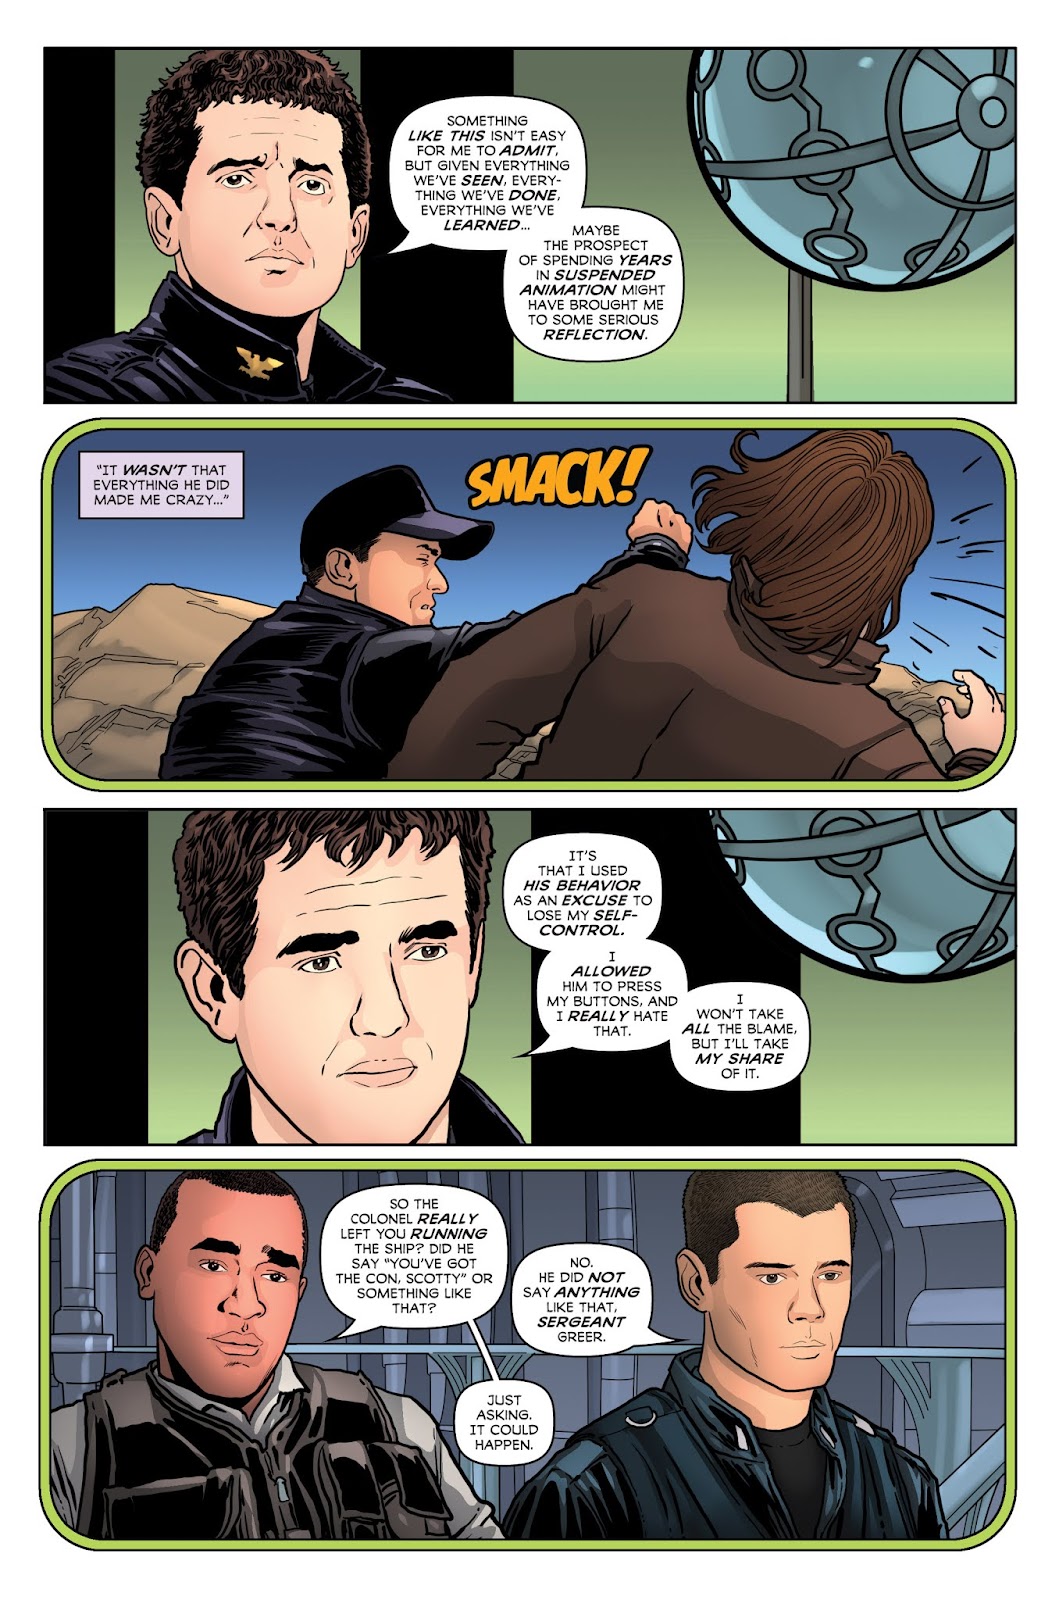 Stargate Atlantis/Stargate issue 2 - Page 8